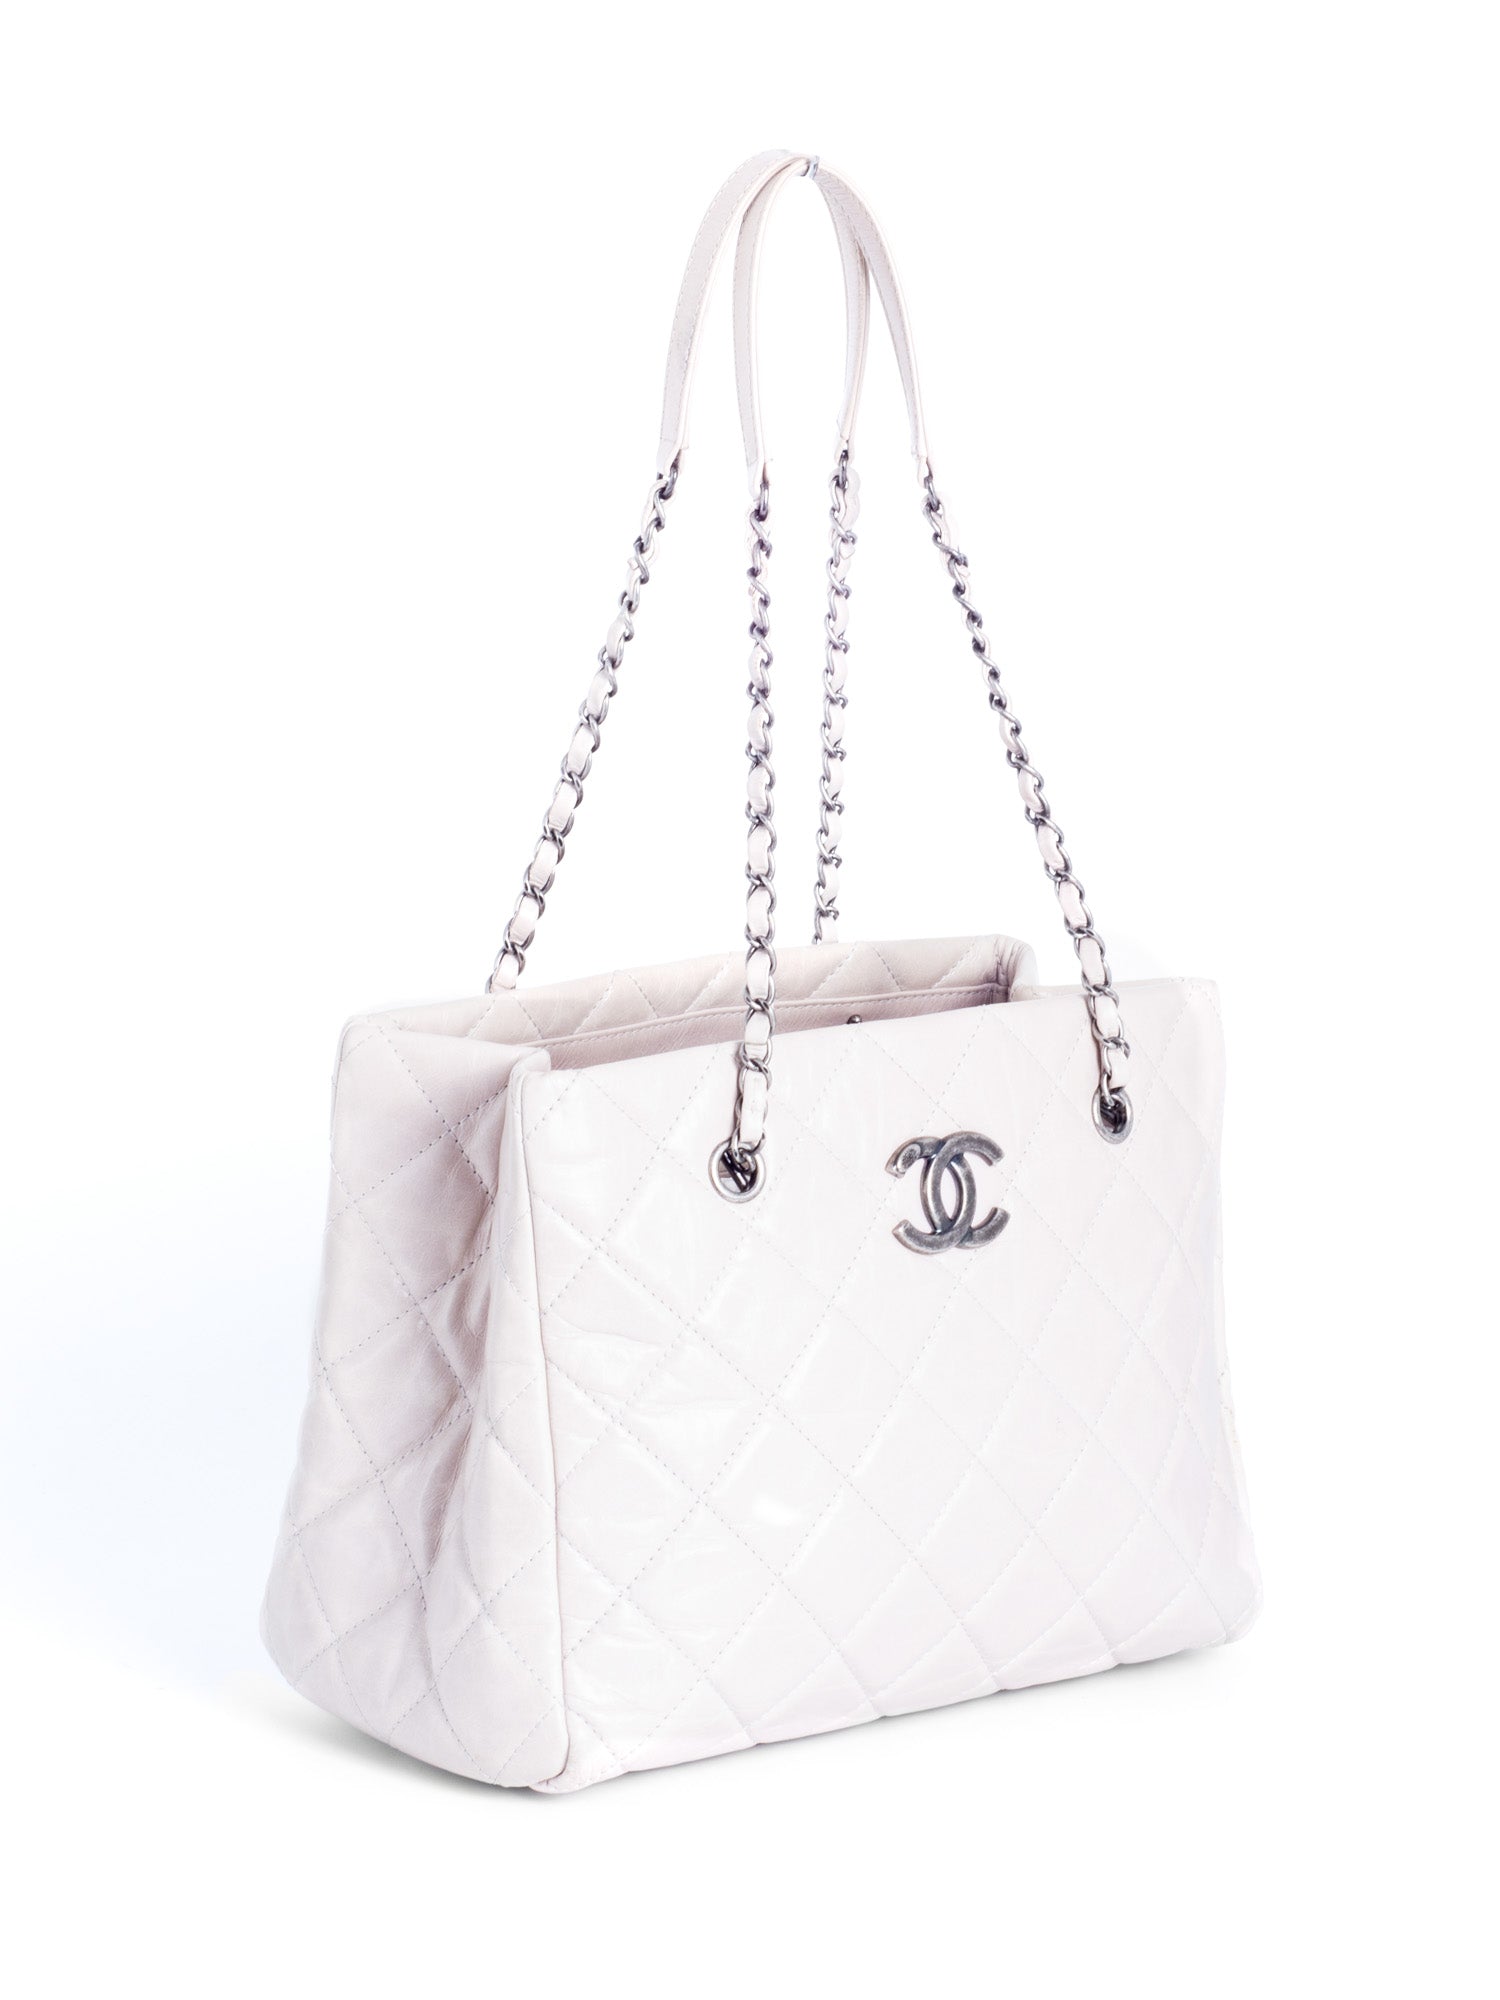 CHANEL CC Logo Quilted Leather Grand Shopper Bag Light Taupe-designer resale